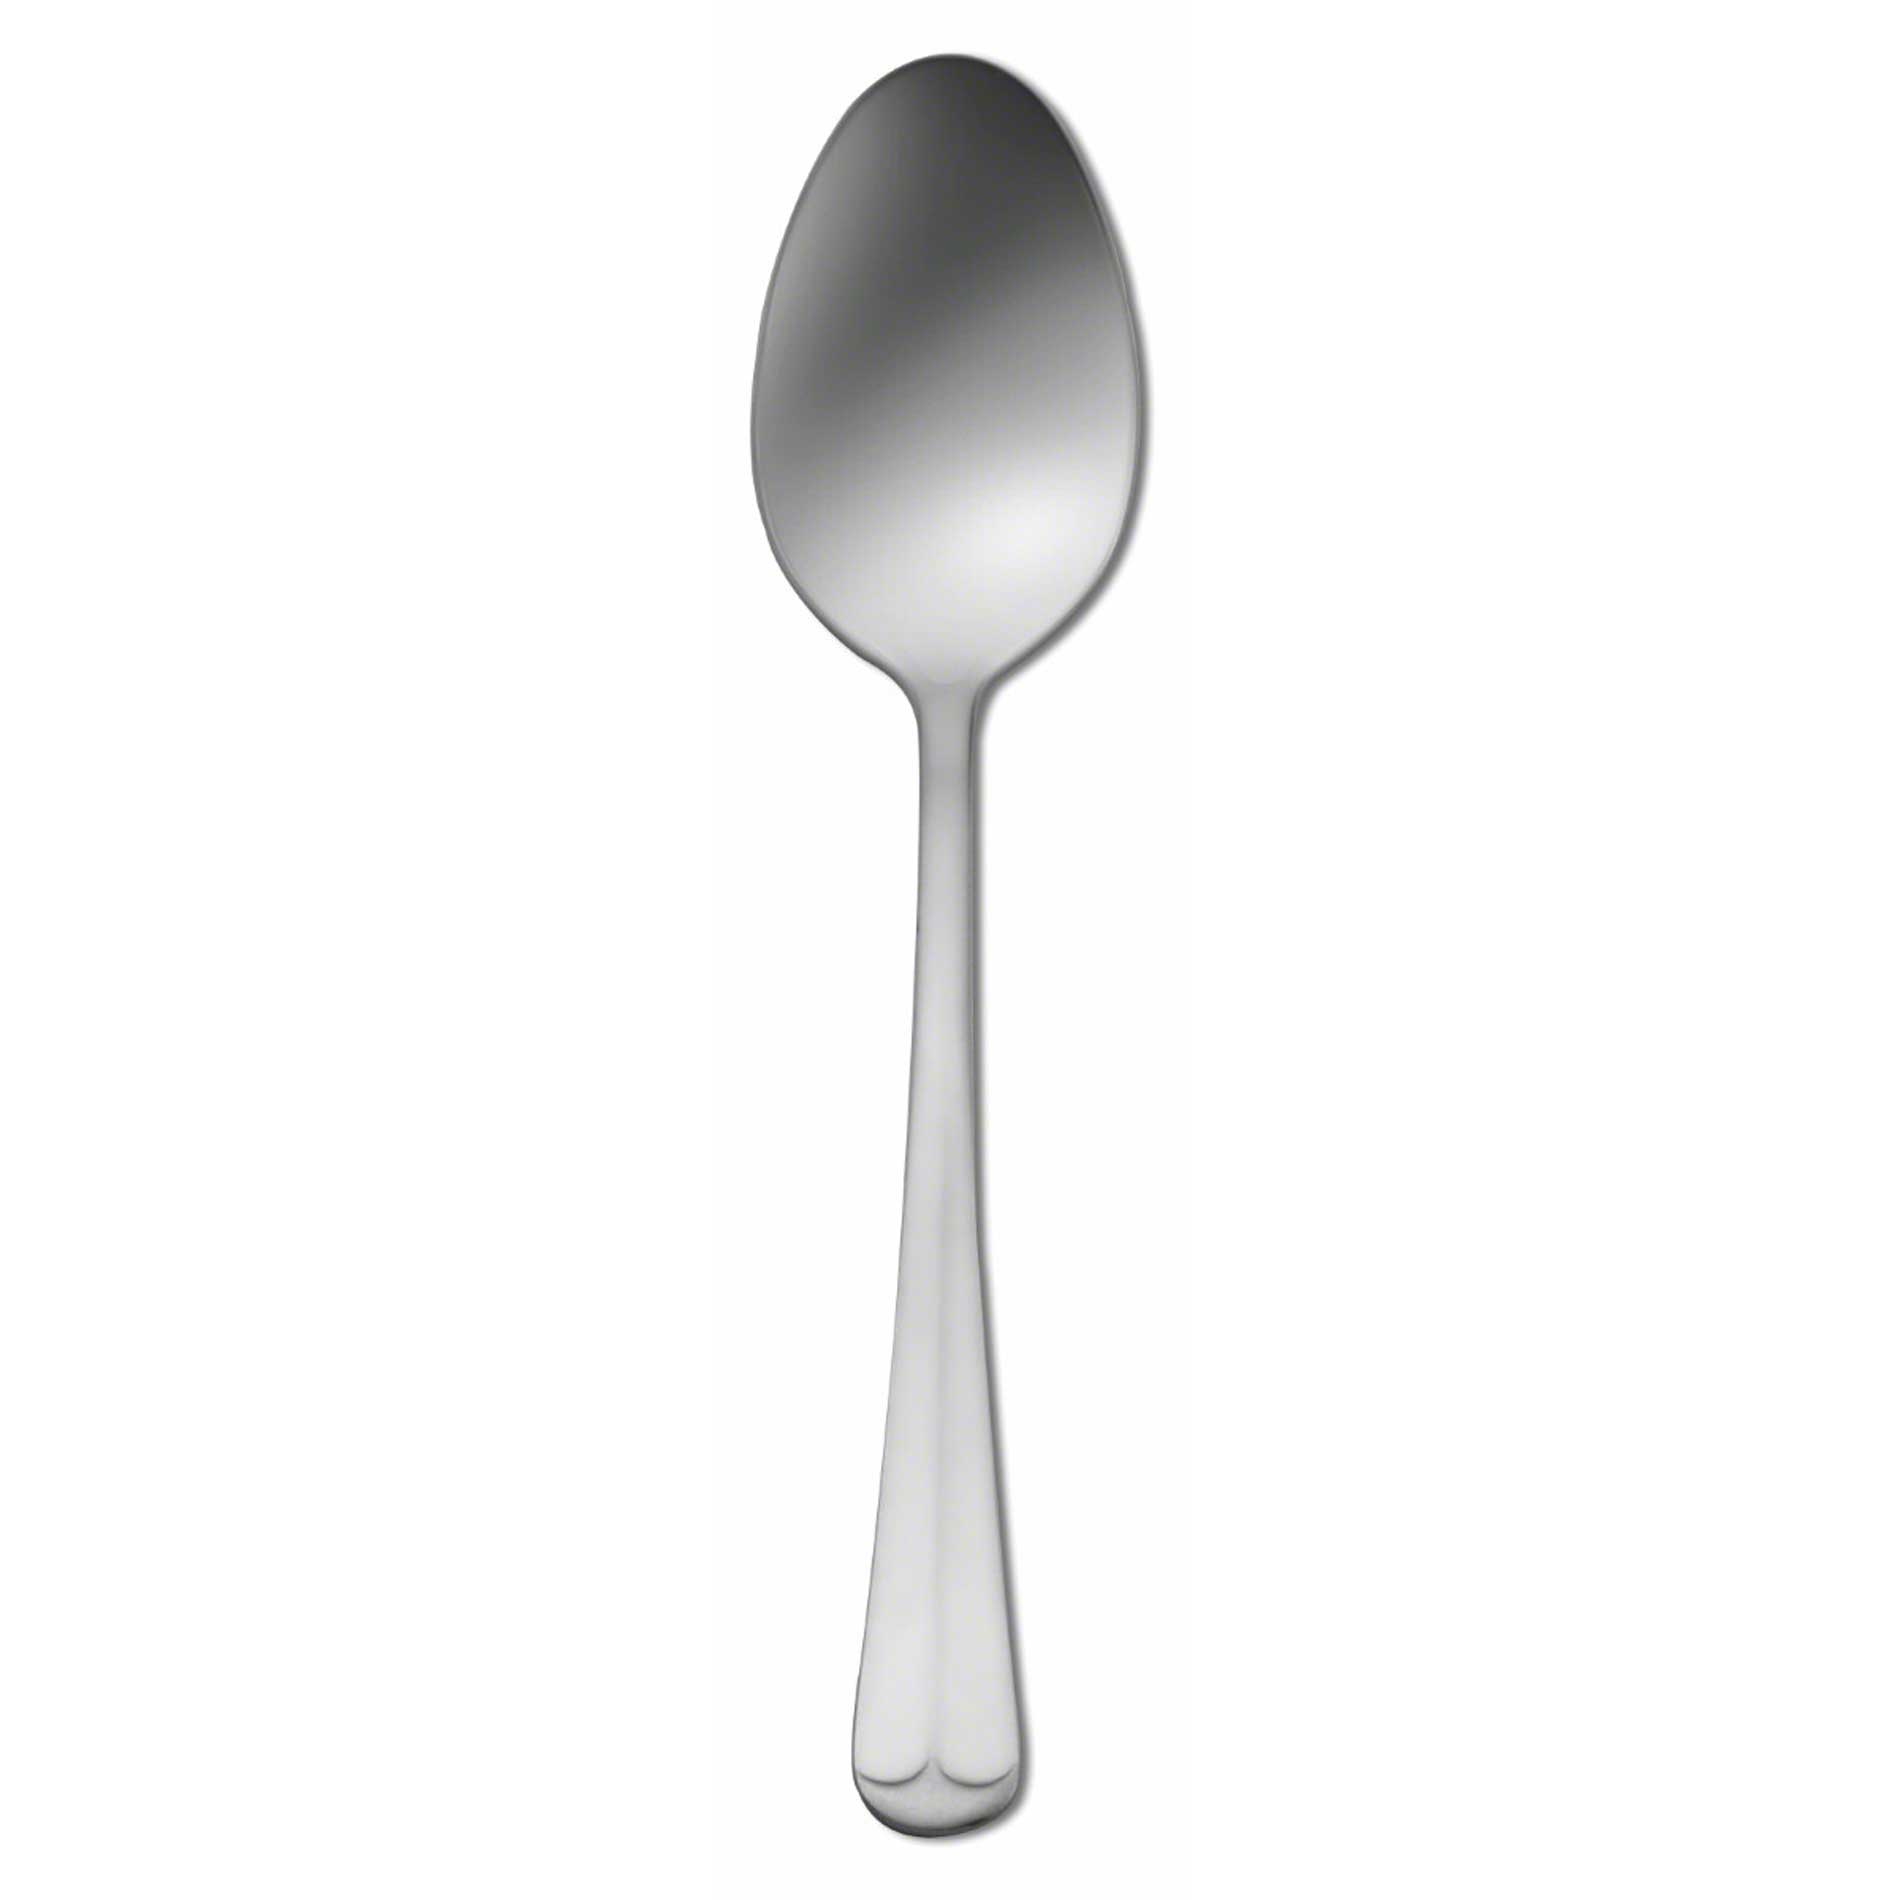 Plastic spoon clipart